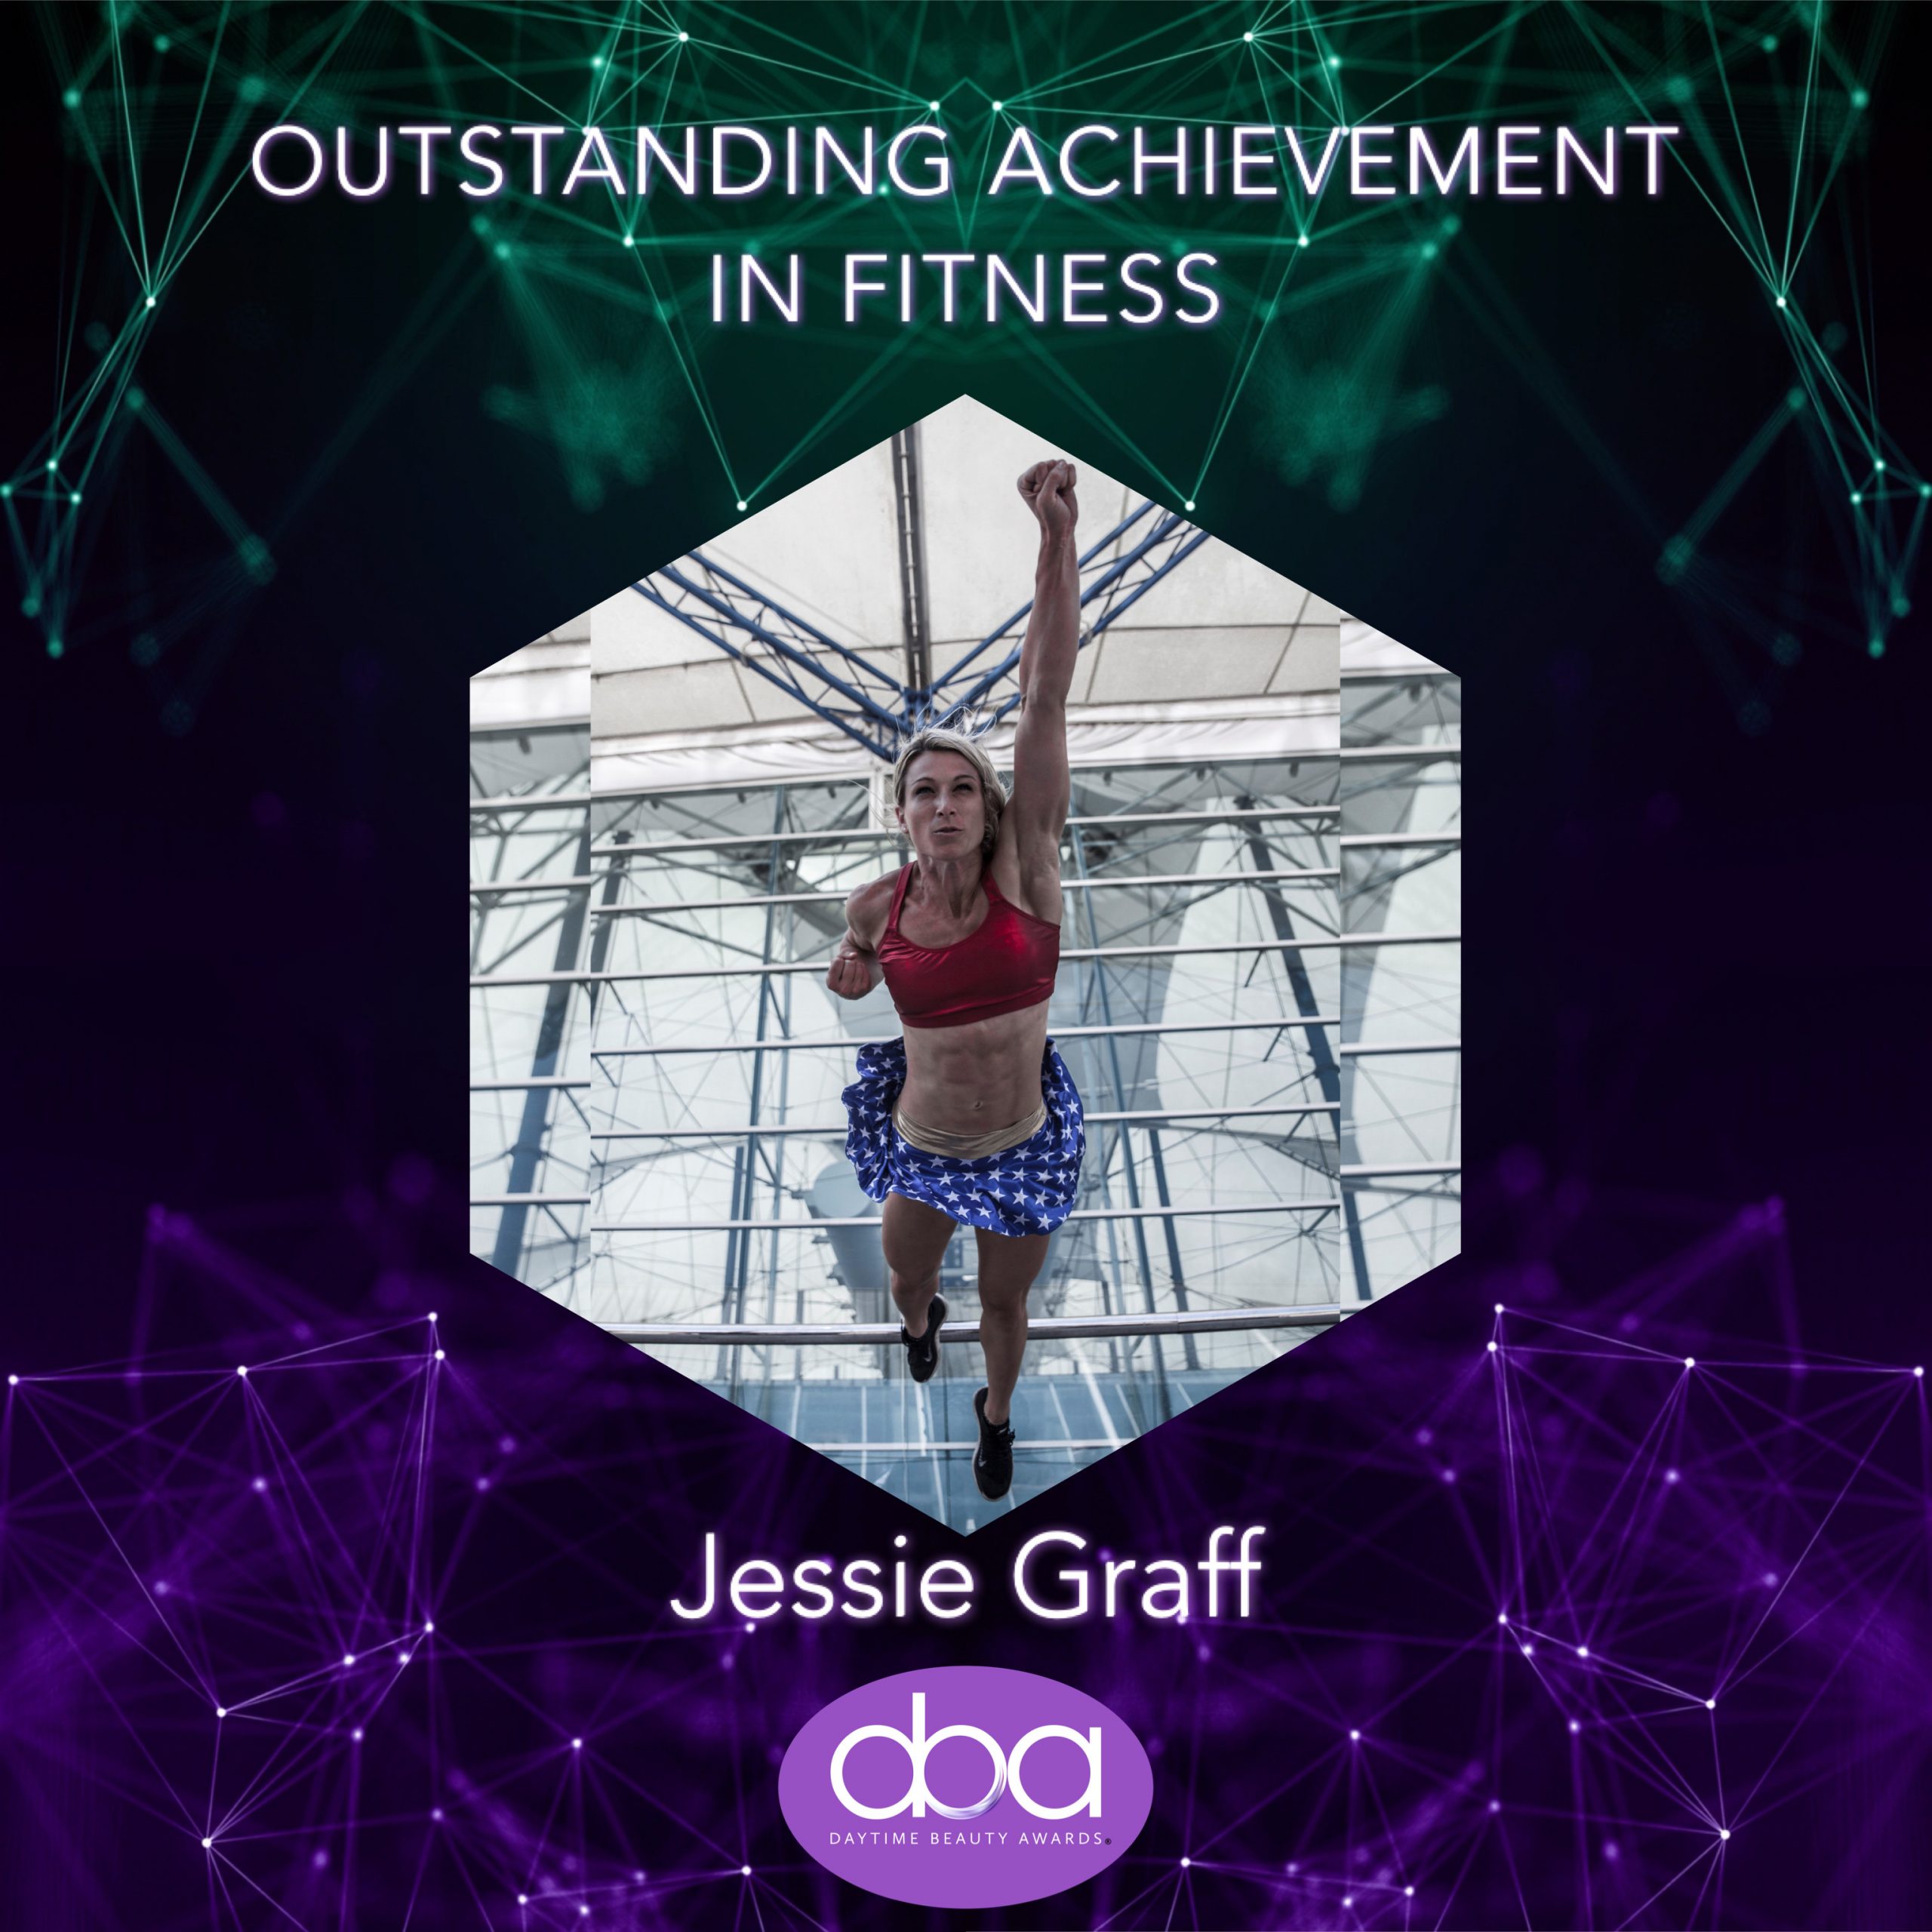 jessie graff, daytime beauty awards, fitness, honoree award, stunts